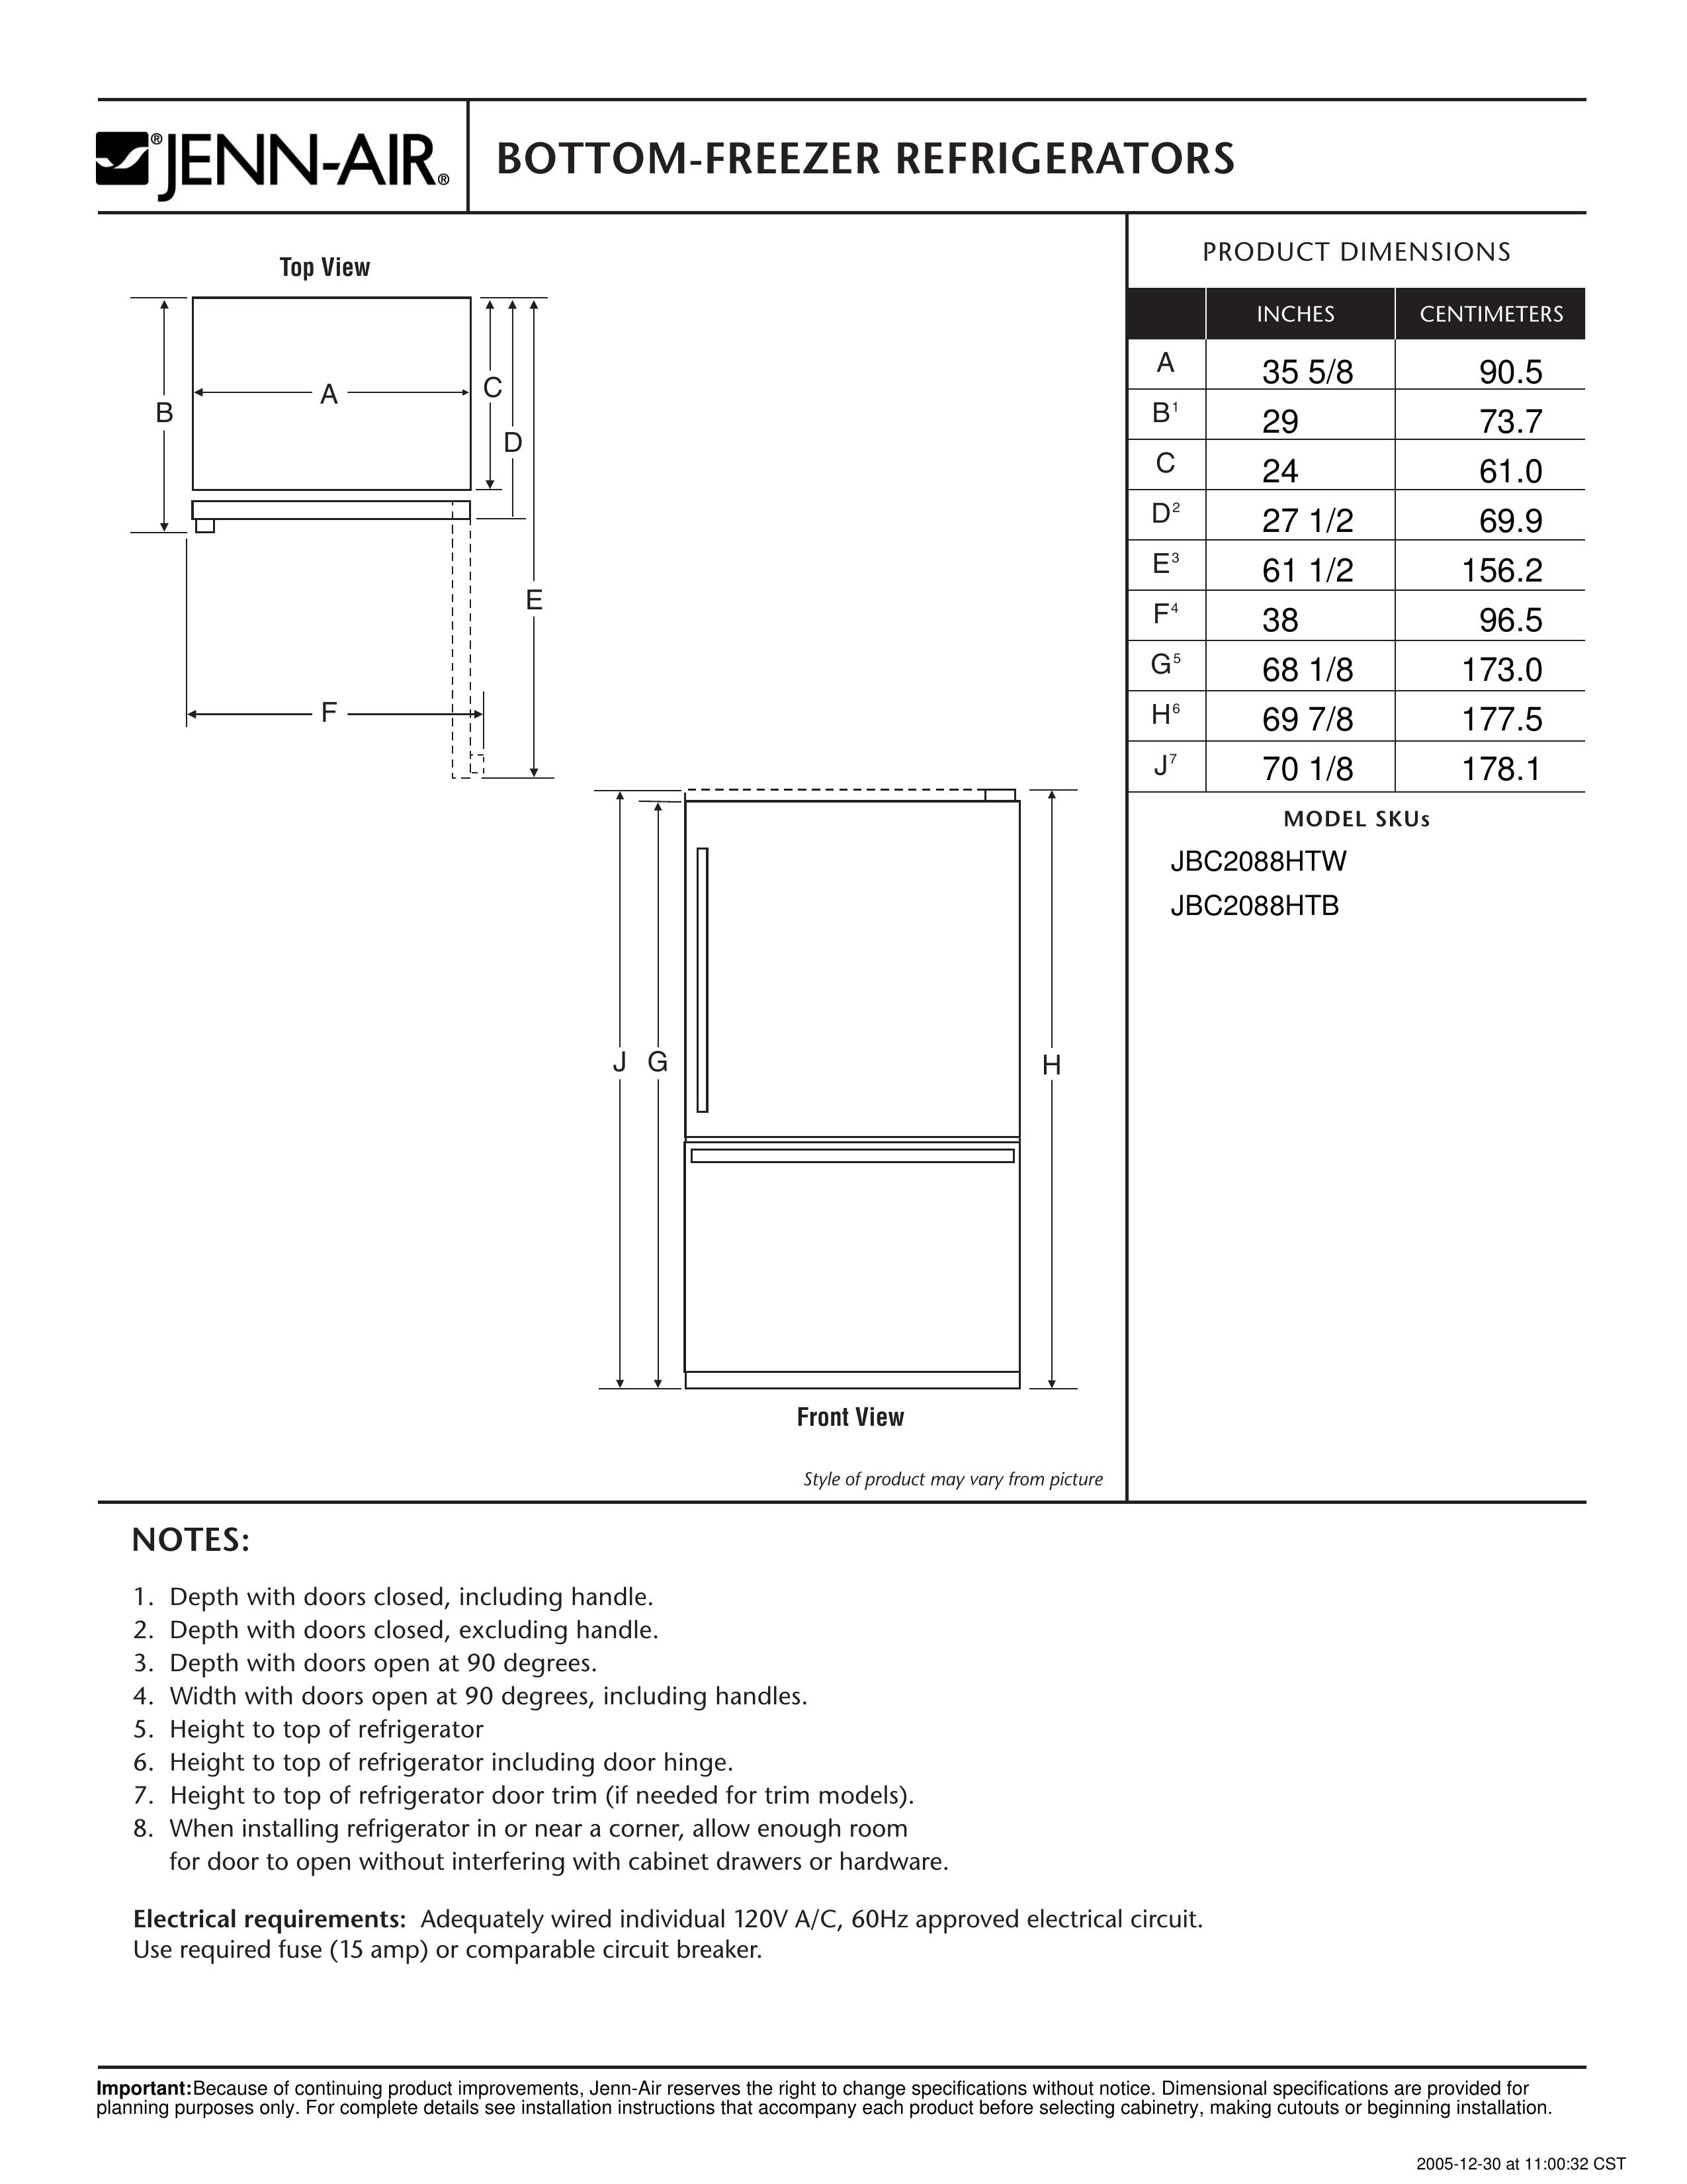 Jenn-Air JBC2088HTW Refrigerator User Manual